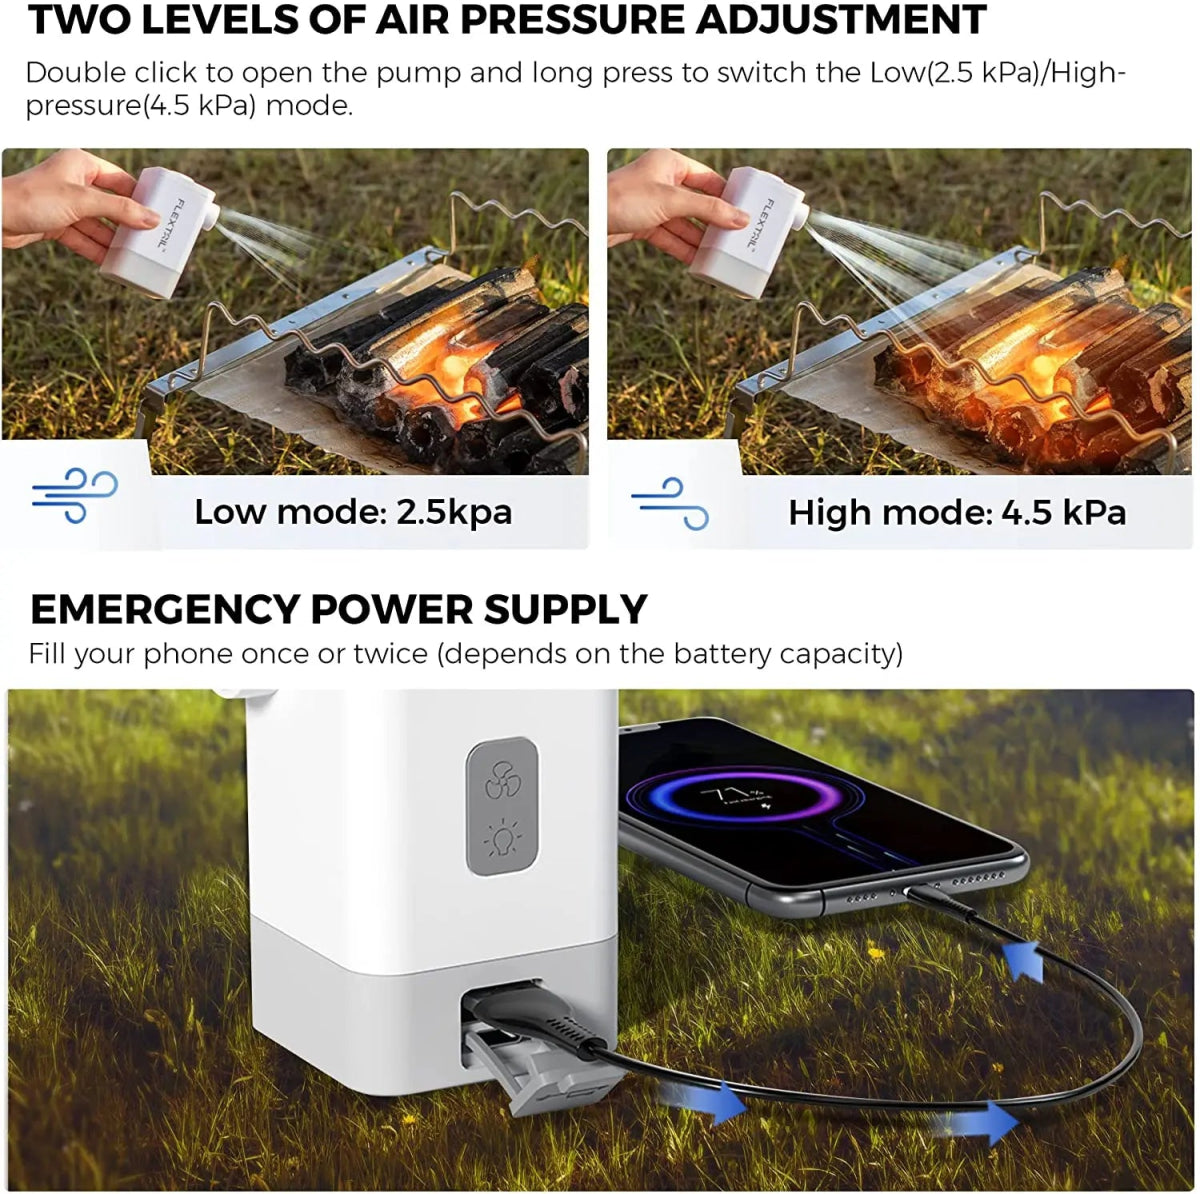 FLEXTAILGEAR Electric Air Pump Ultralight Portable Air Pump Rechargeable Battery - Coffeio Store